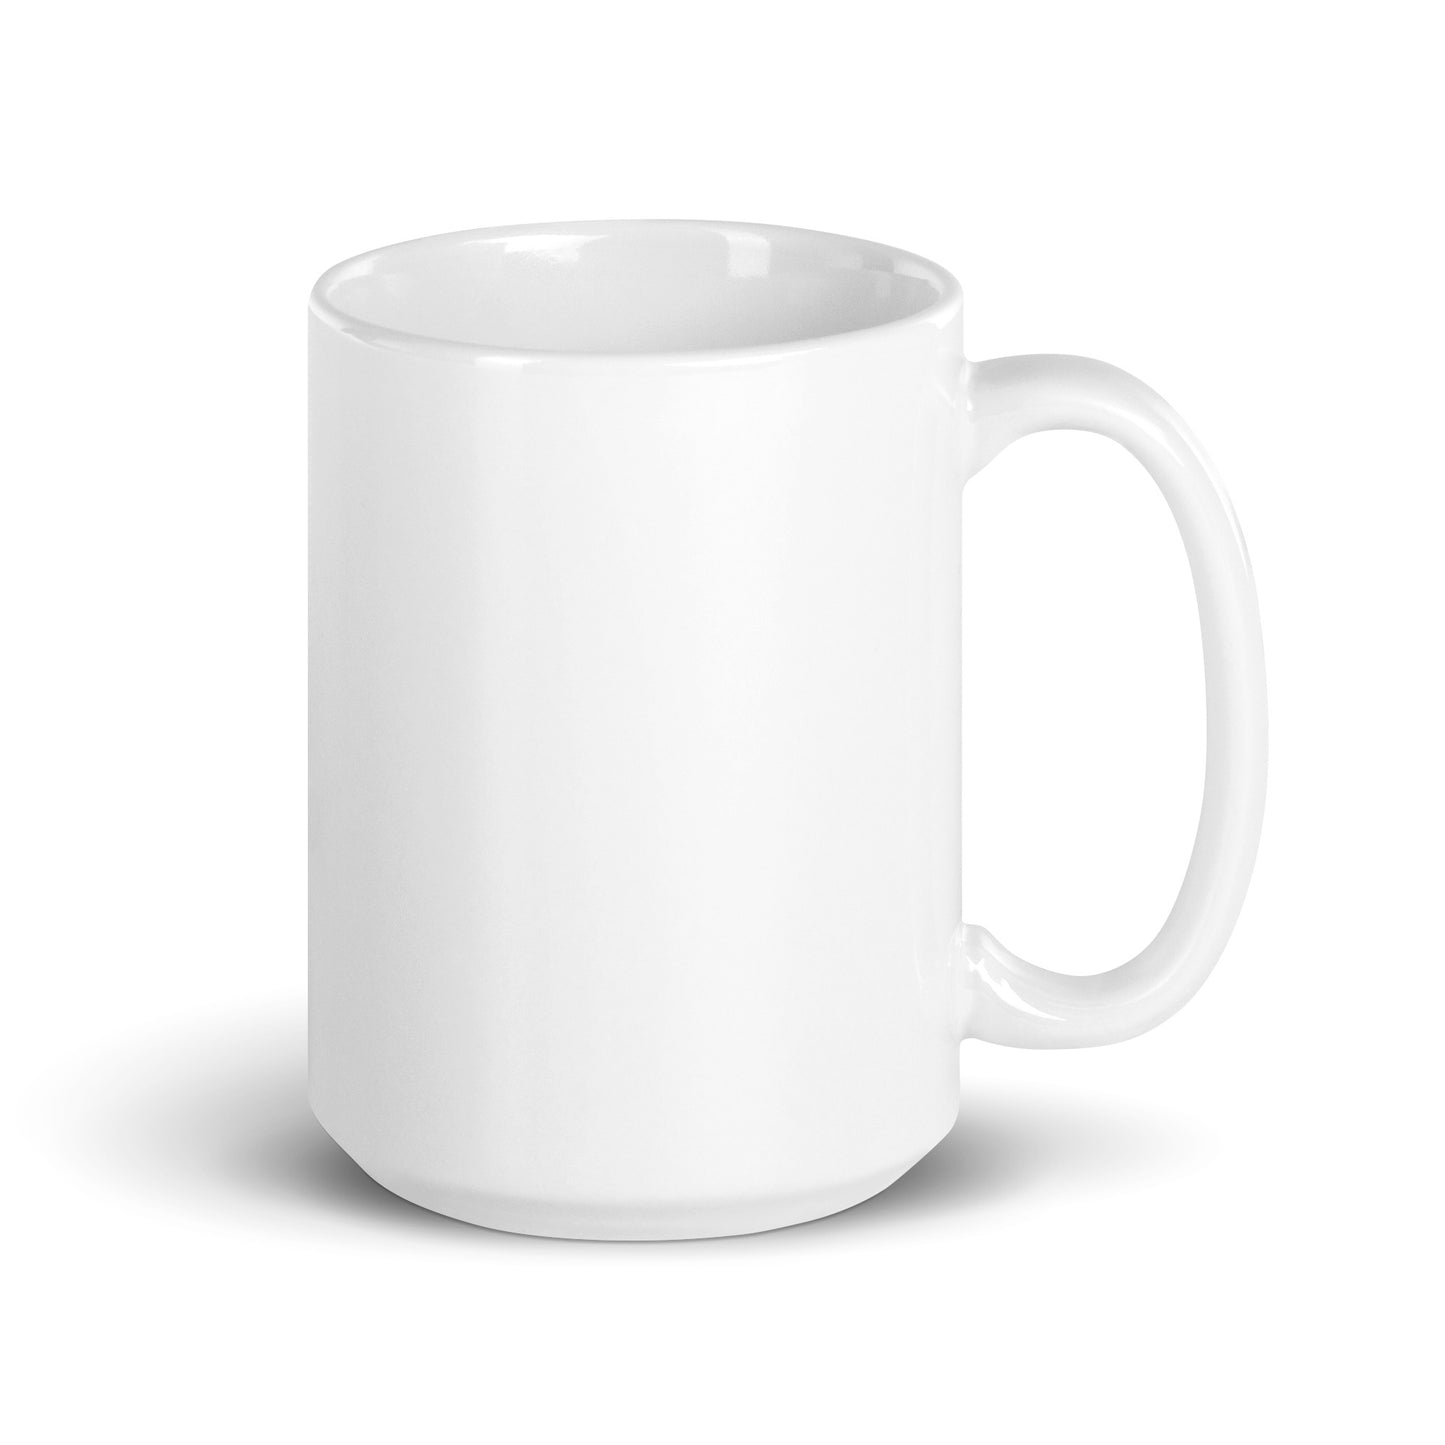 The Randall Series Rabbit White glossy mug